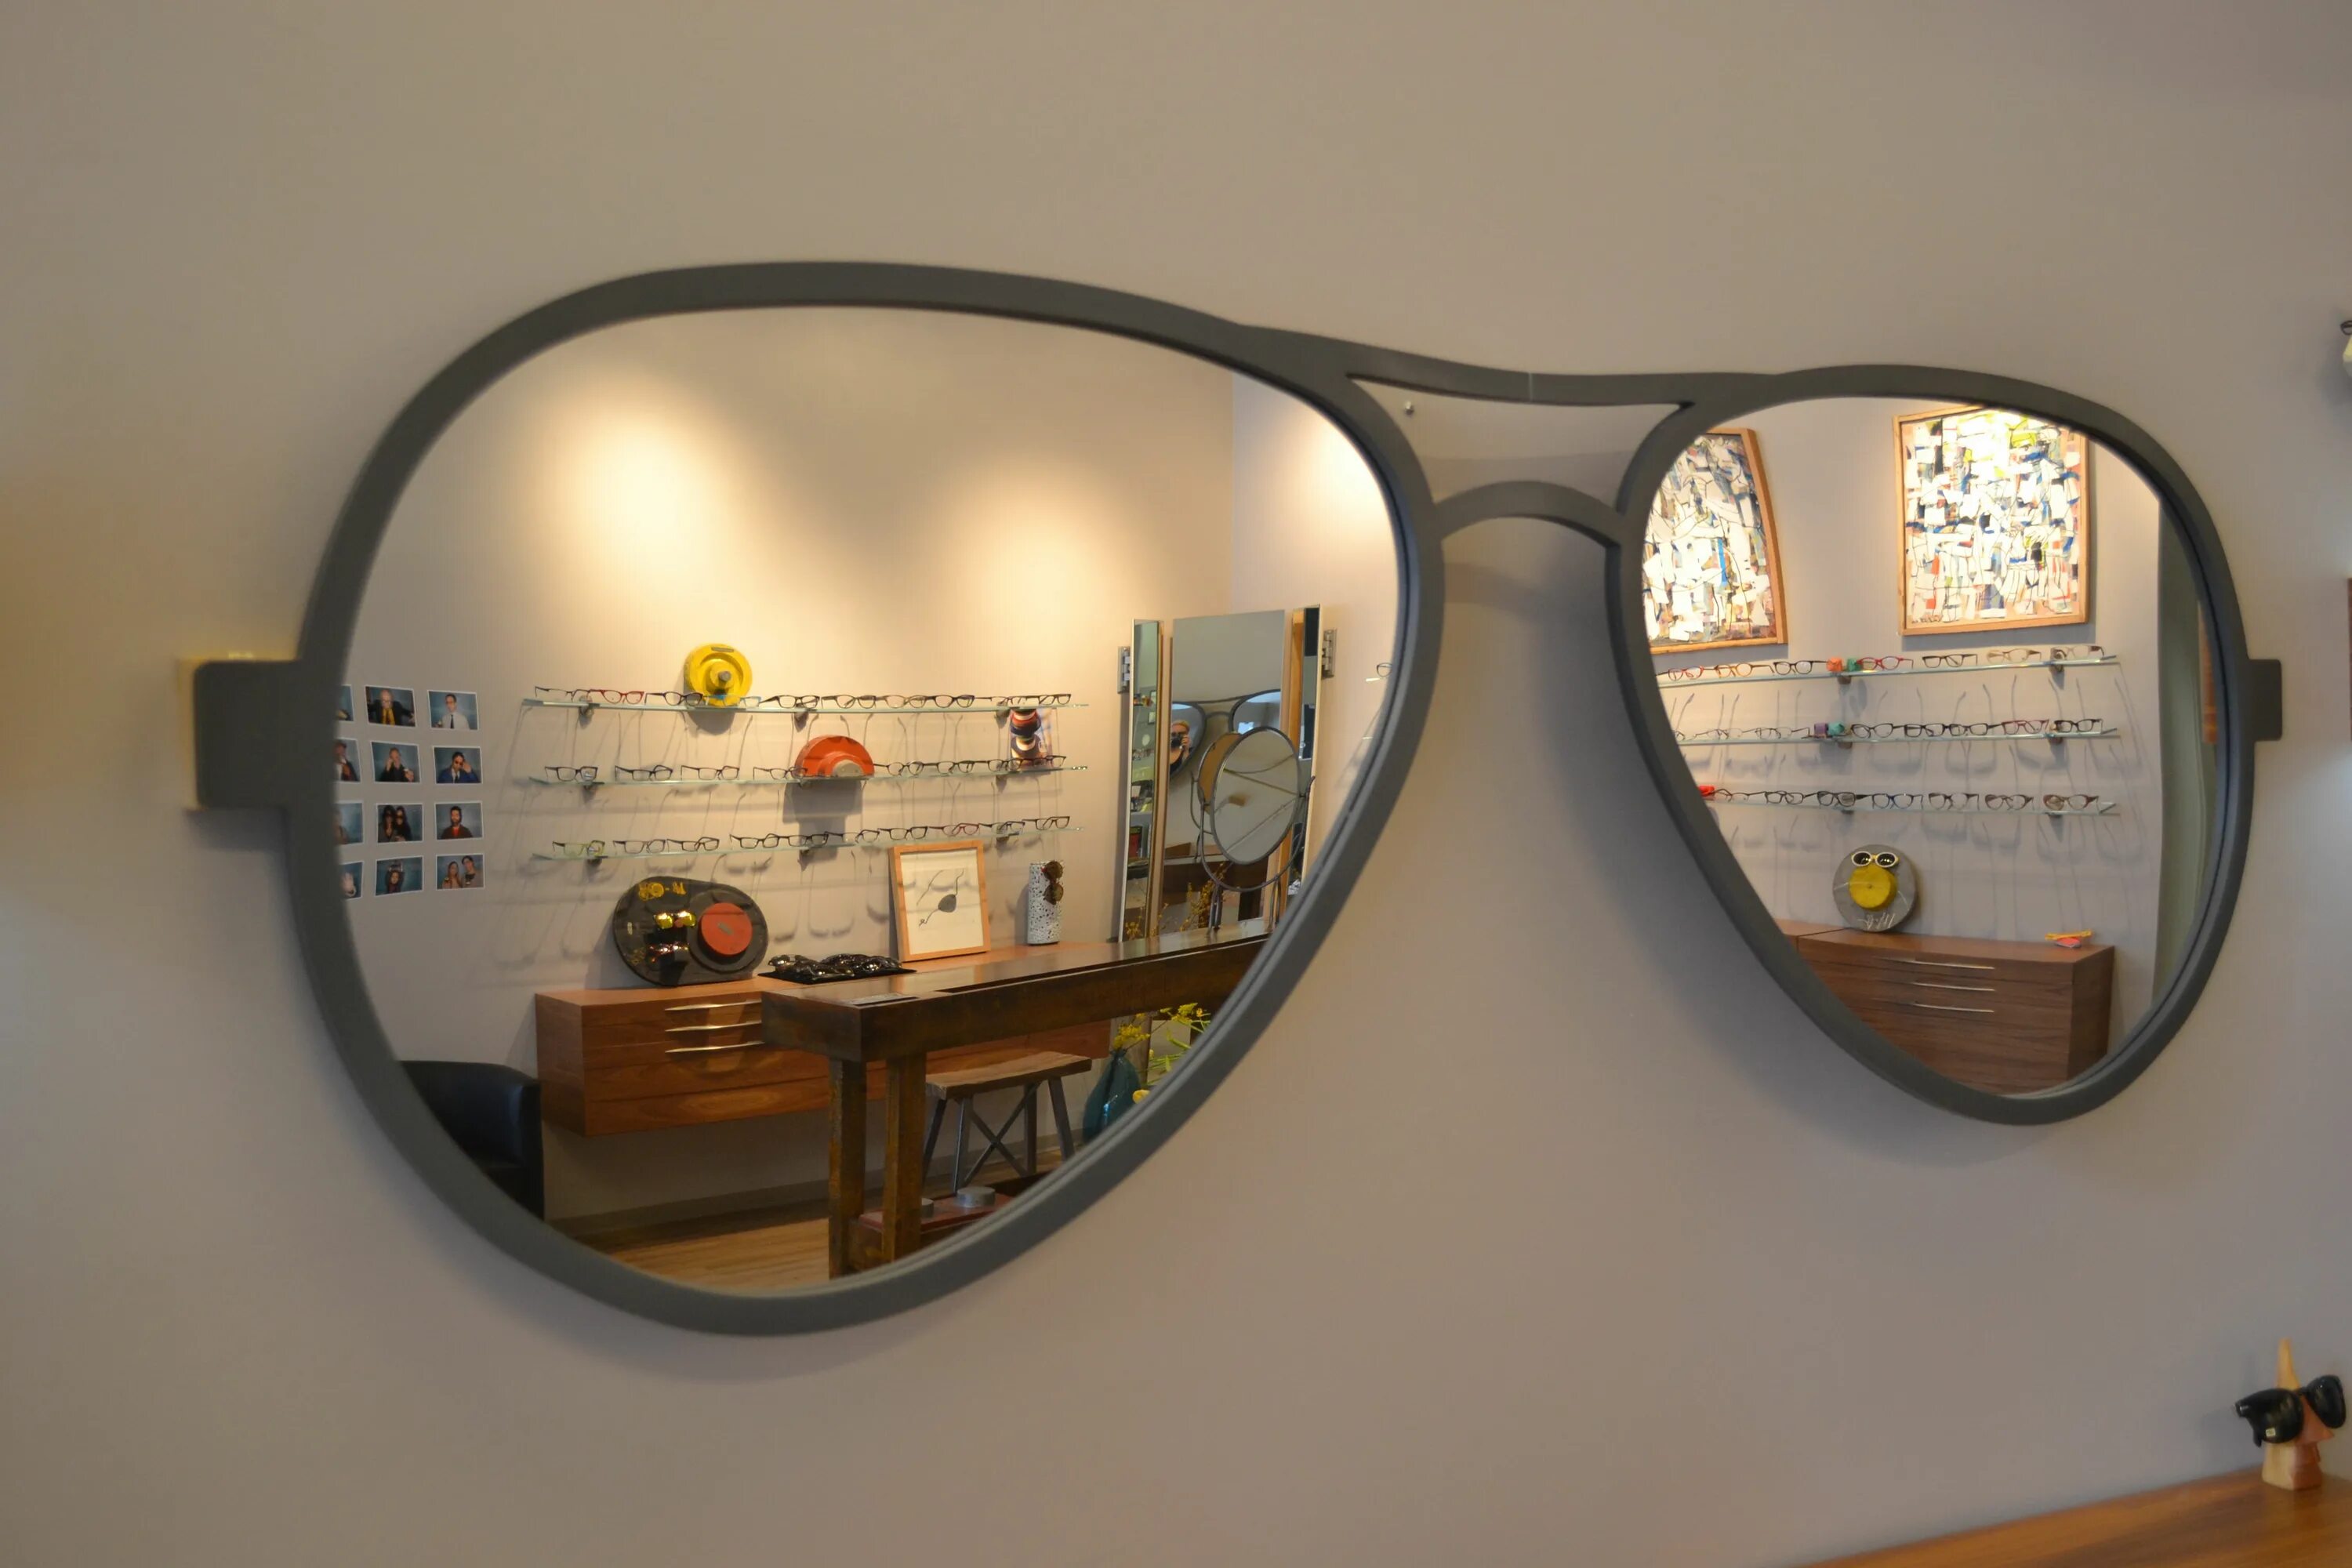 Best mirrors. Зеркала в оправе на стену. Зеркало очки. Дизайнерские зеркала очки. Обзорное зеркало.